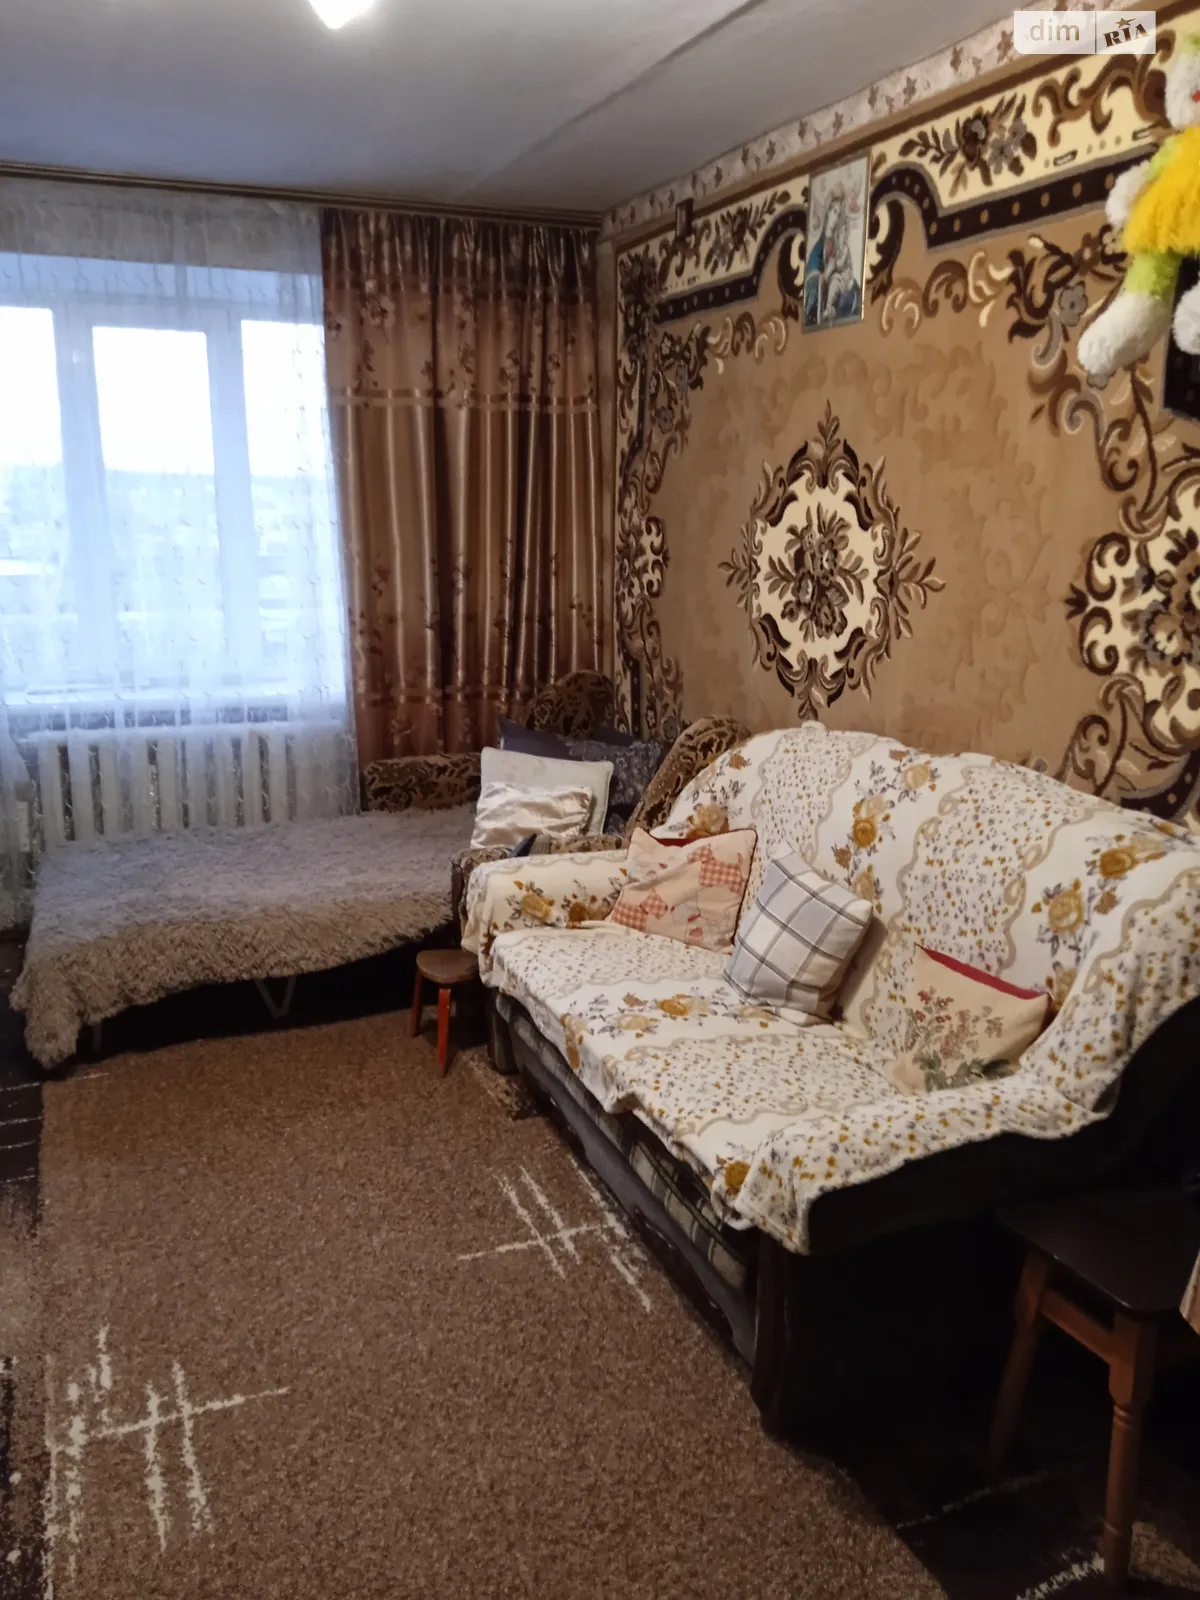 Продается комната 25 кв. м в Виннице, цена: 17500 $ - фото 1